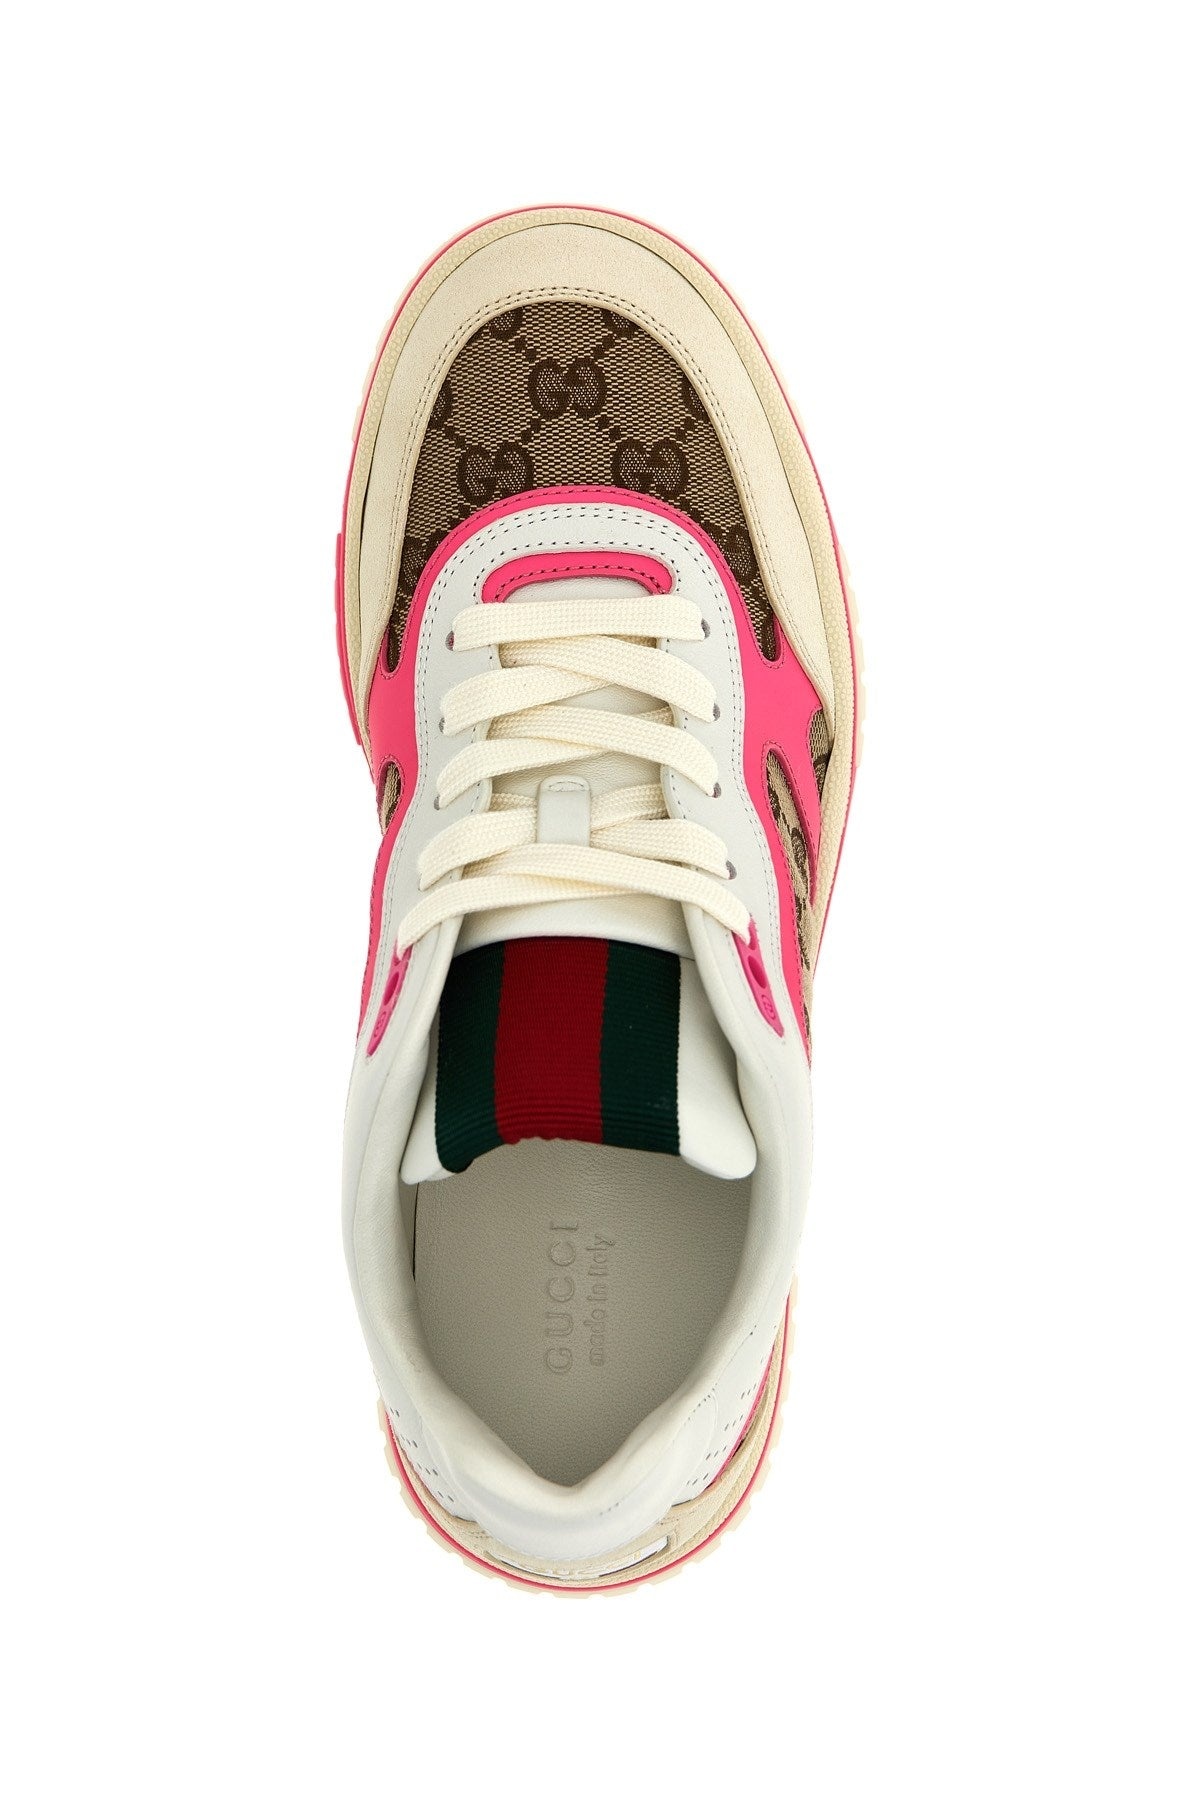 Gucci Women 'Gucci Re-Web' Sneakers - 3